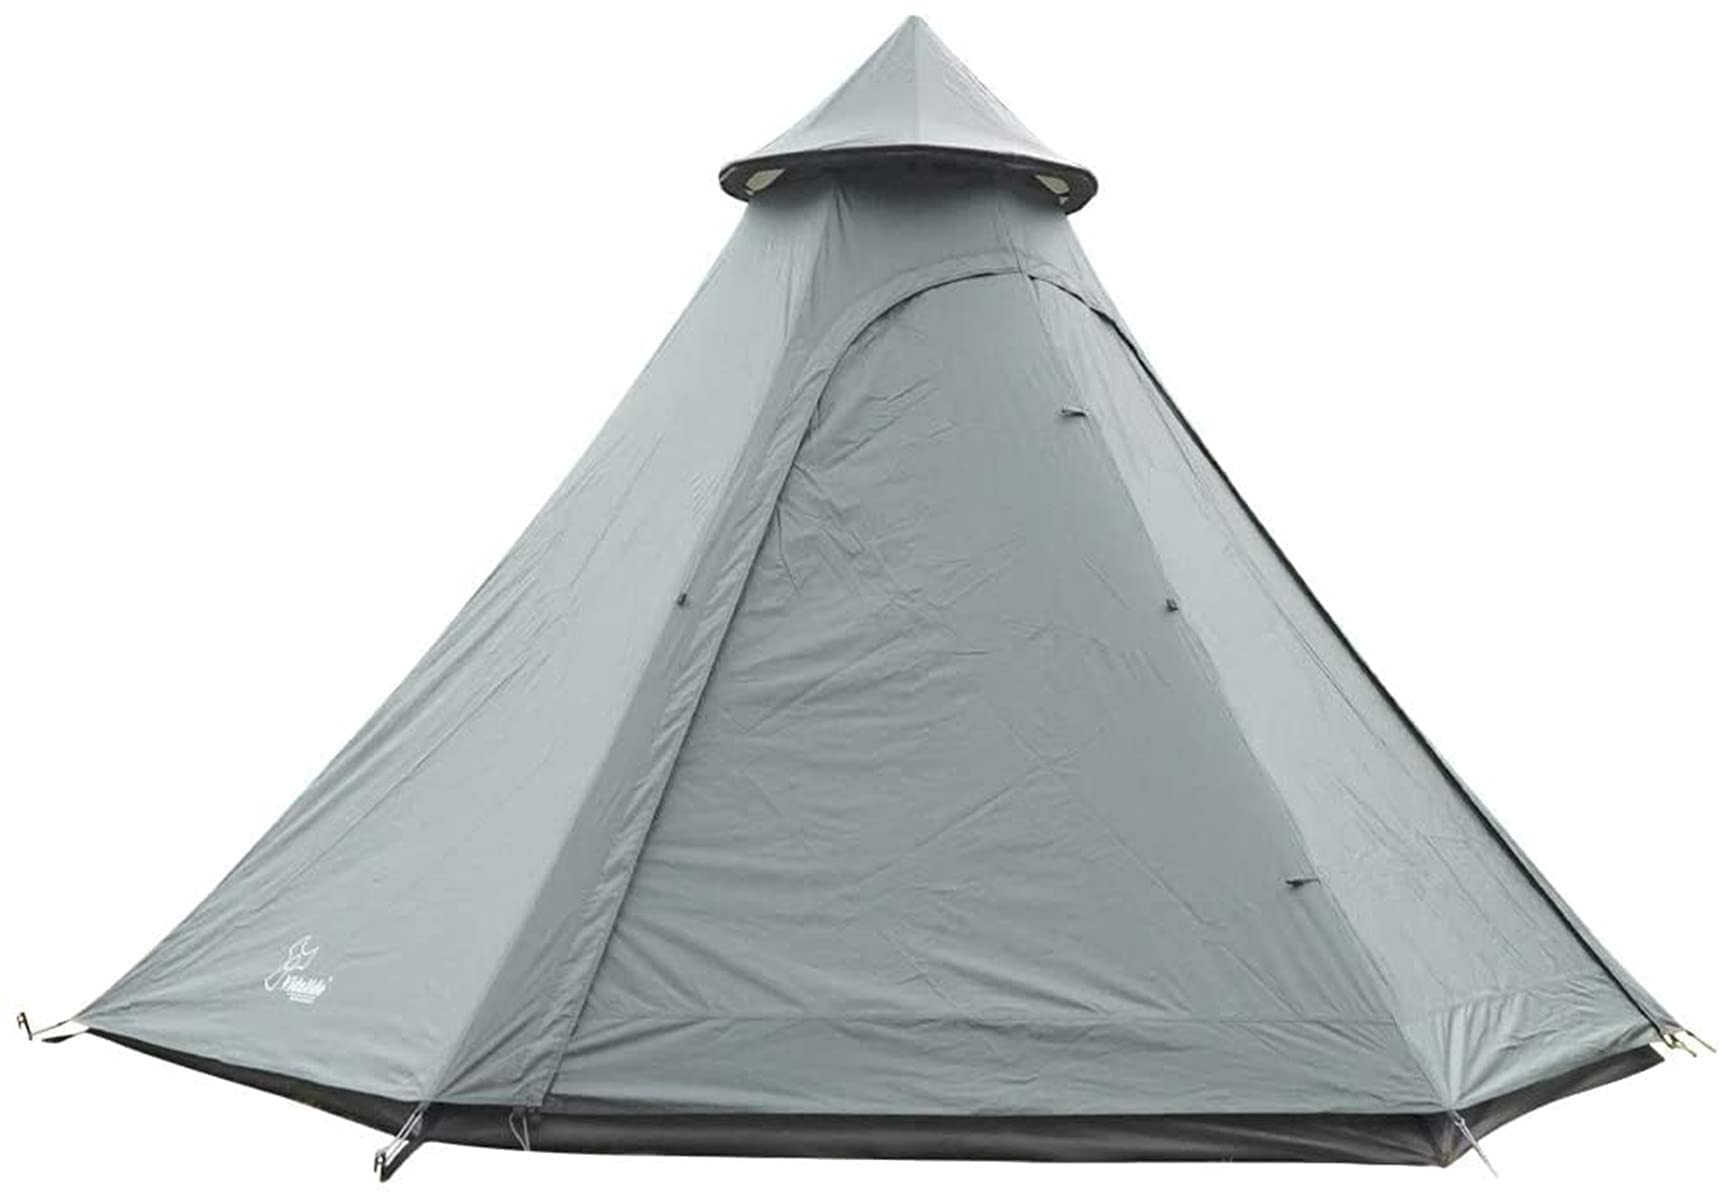 Sport Tent wasserdichte Campingzelt Familienzelt Tipi Zelt Outdoor Doppelschichten Teepee 3.1M / 10ft Pyramidenzelt Indianzelt mit festen Groundsheet (Seladon)